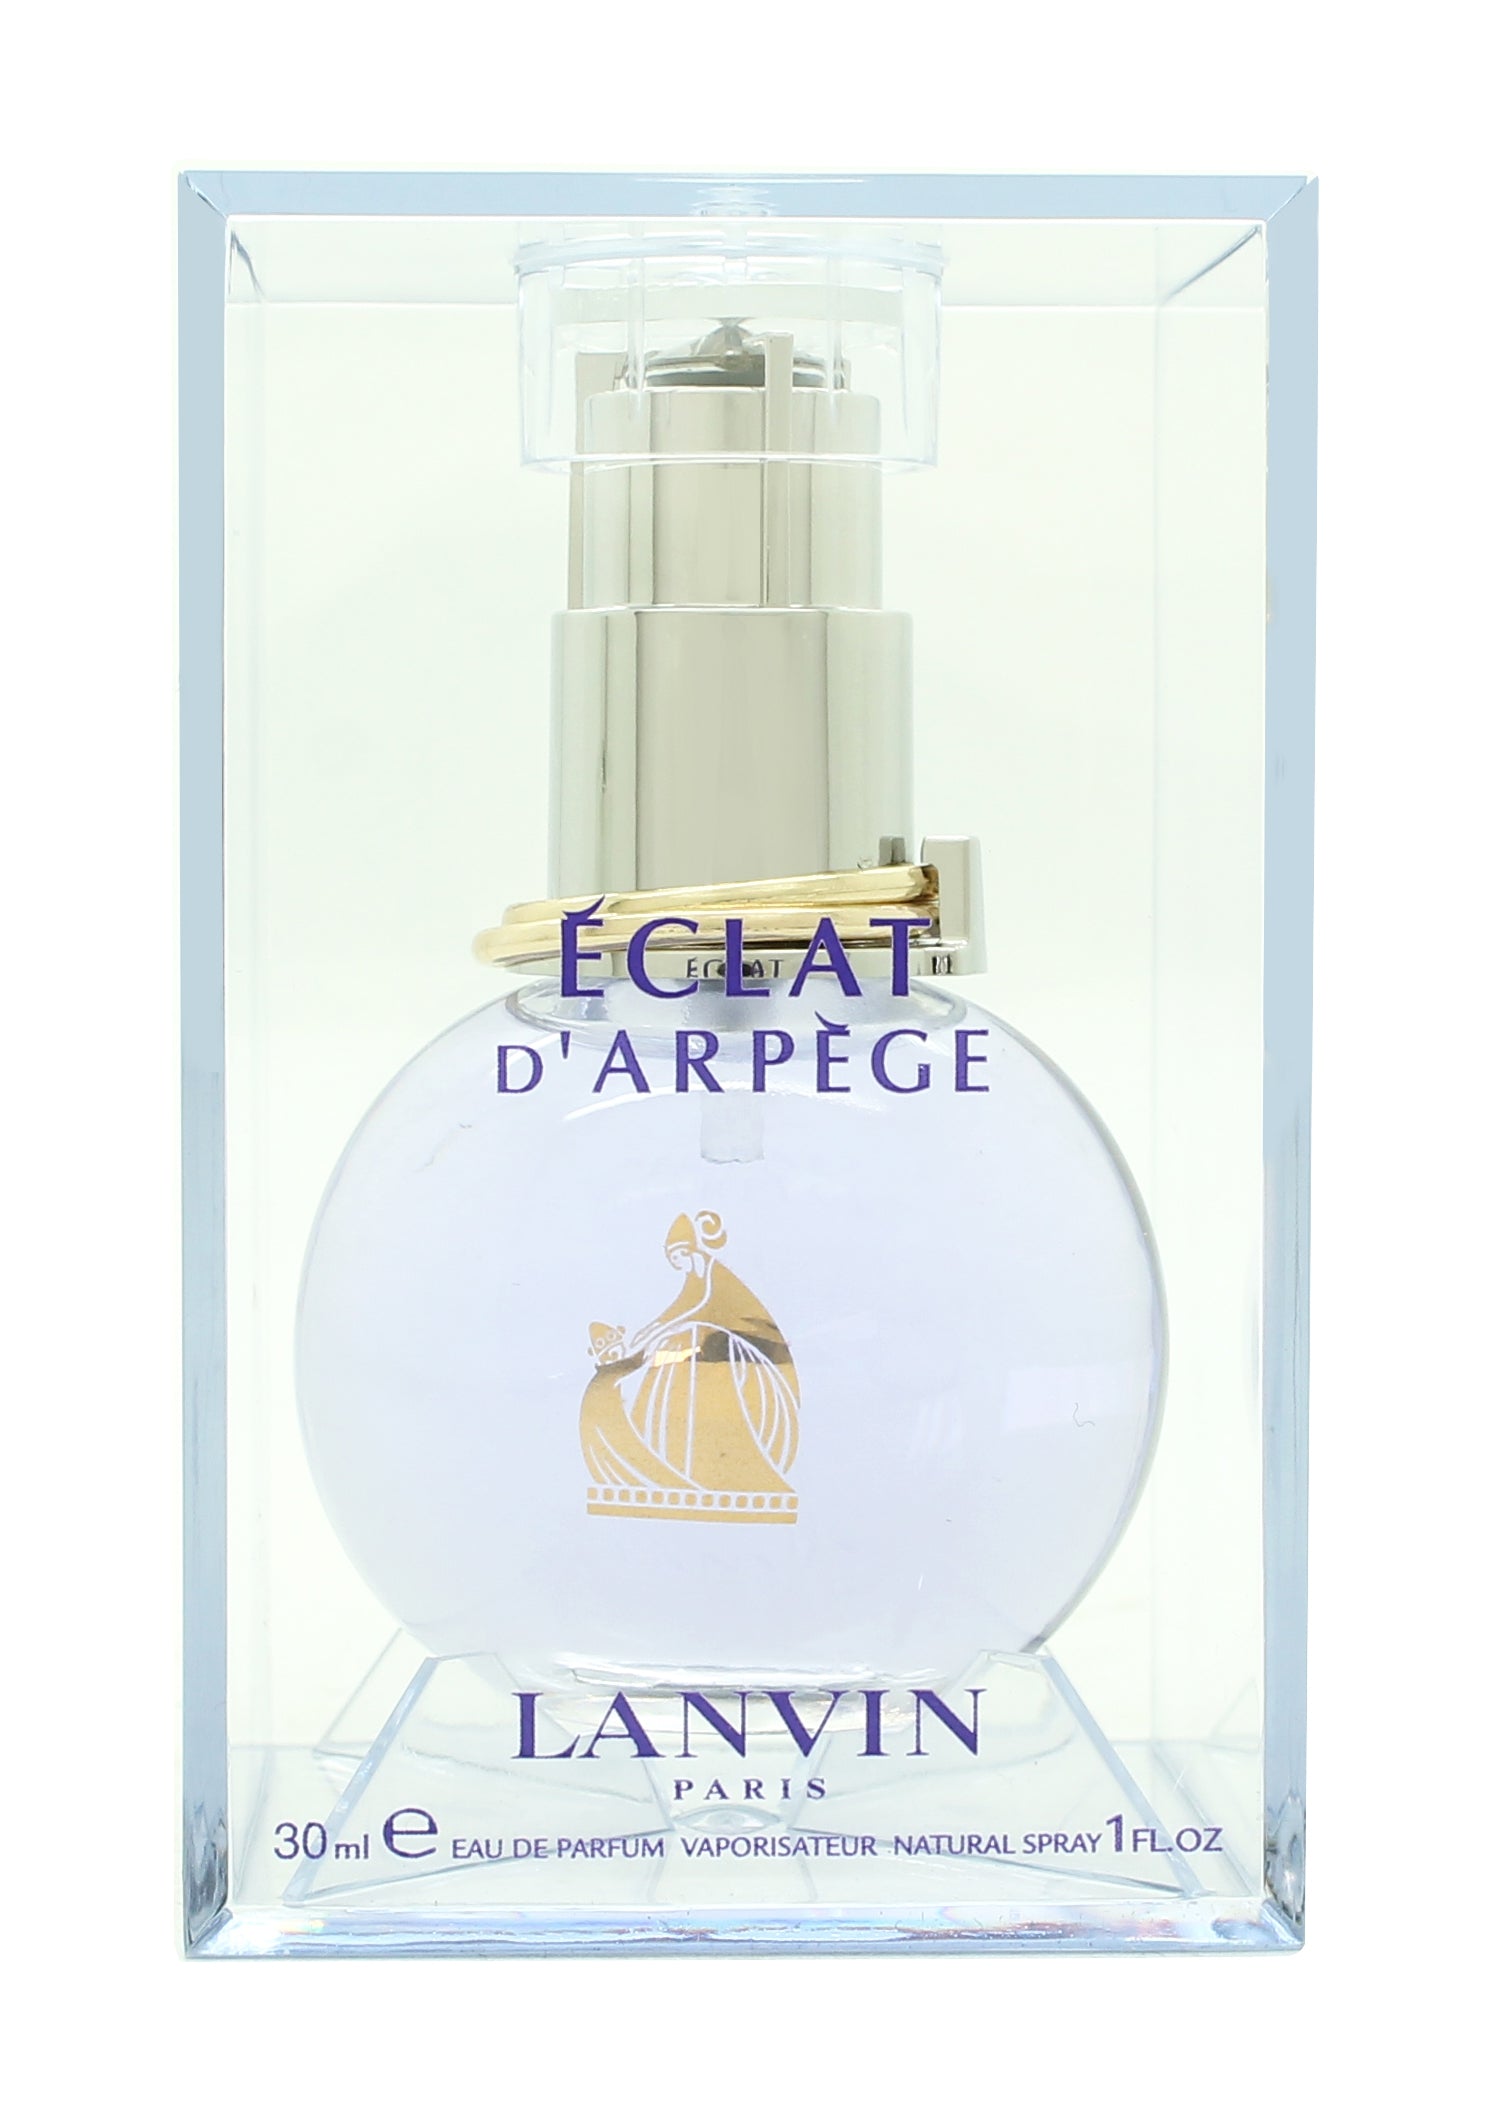 View Lanvin Eclat dArpege Eau de Parfum 30ml Spray information